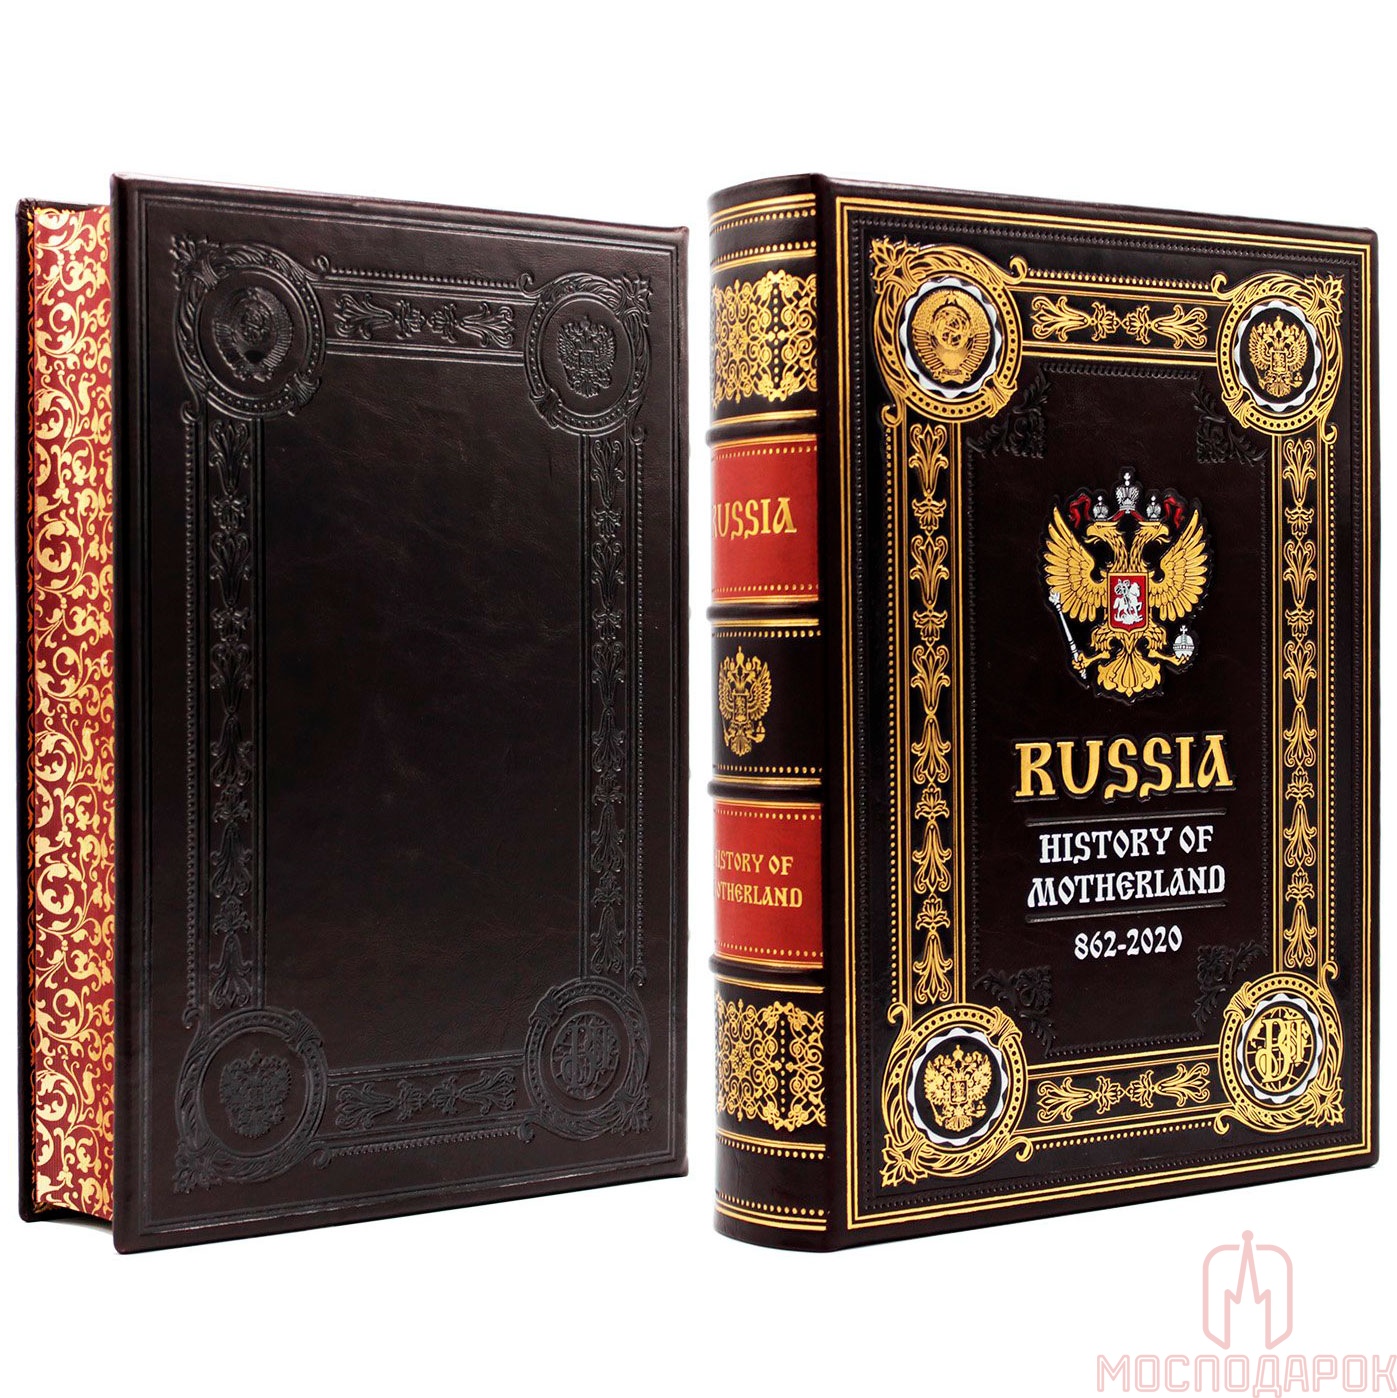 Подарочная книга "Russia" History of Motherland 862-2020 - артикул: S10524 | Мосподарок 